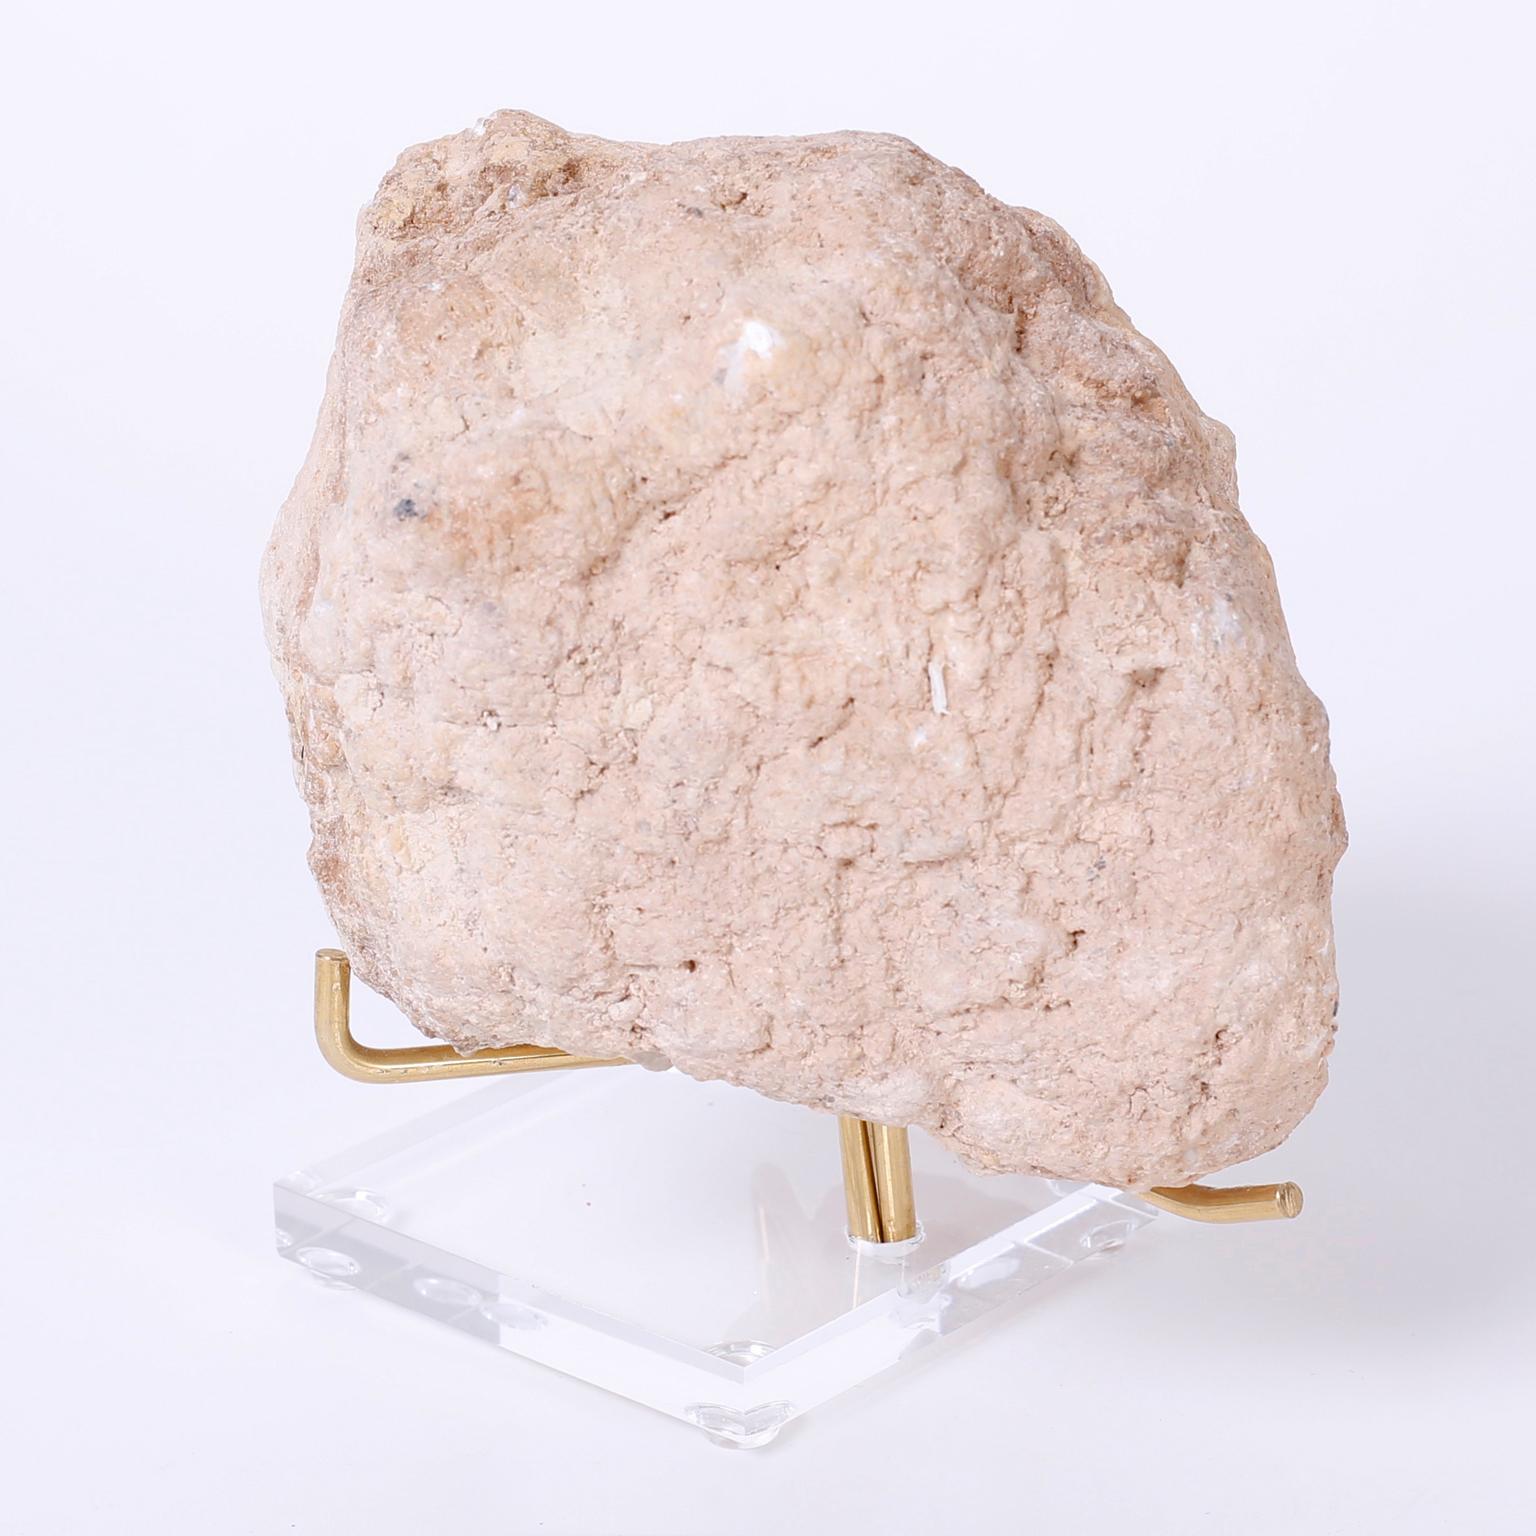 Two Quartz Geode Specimens, Priced Individually 1